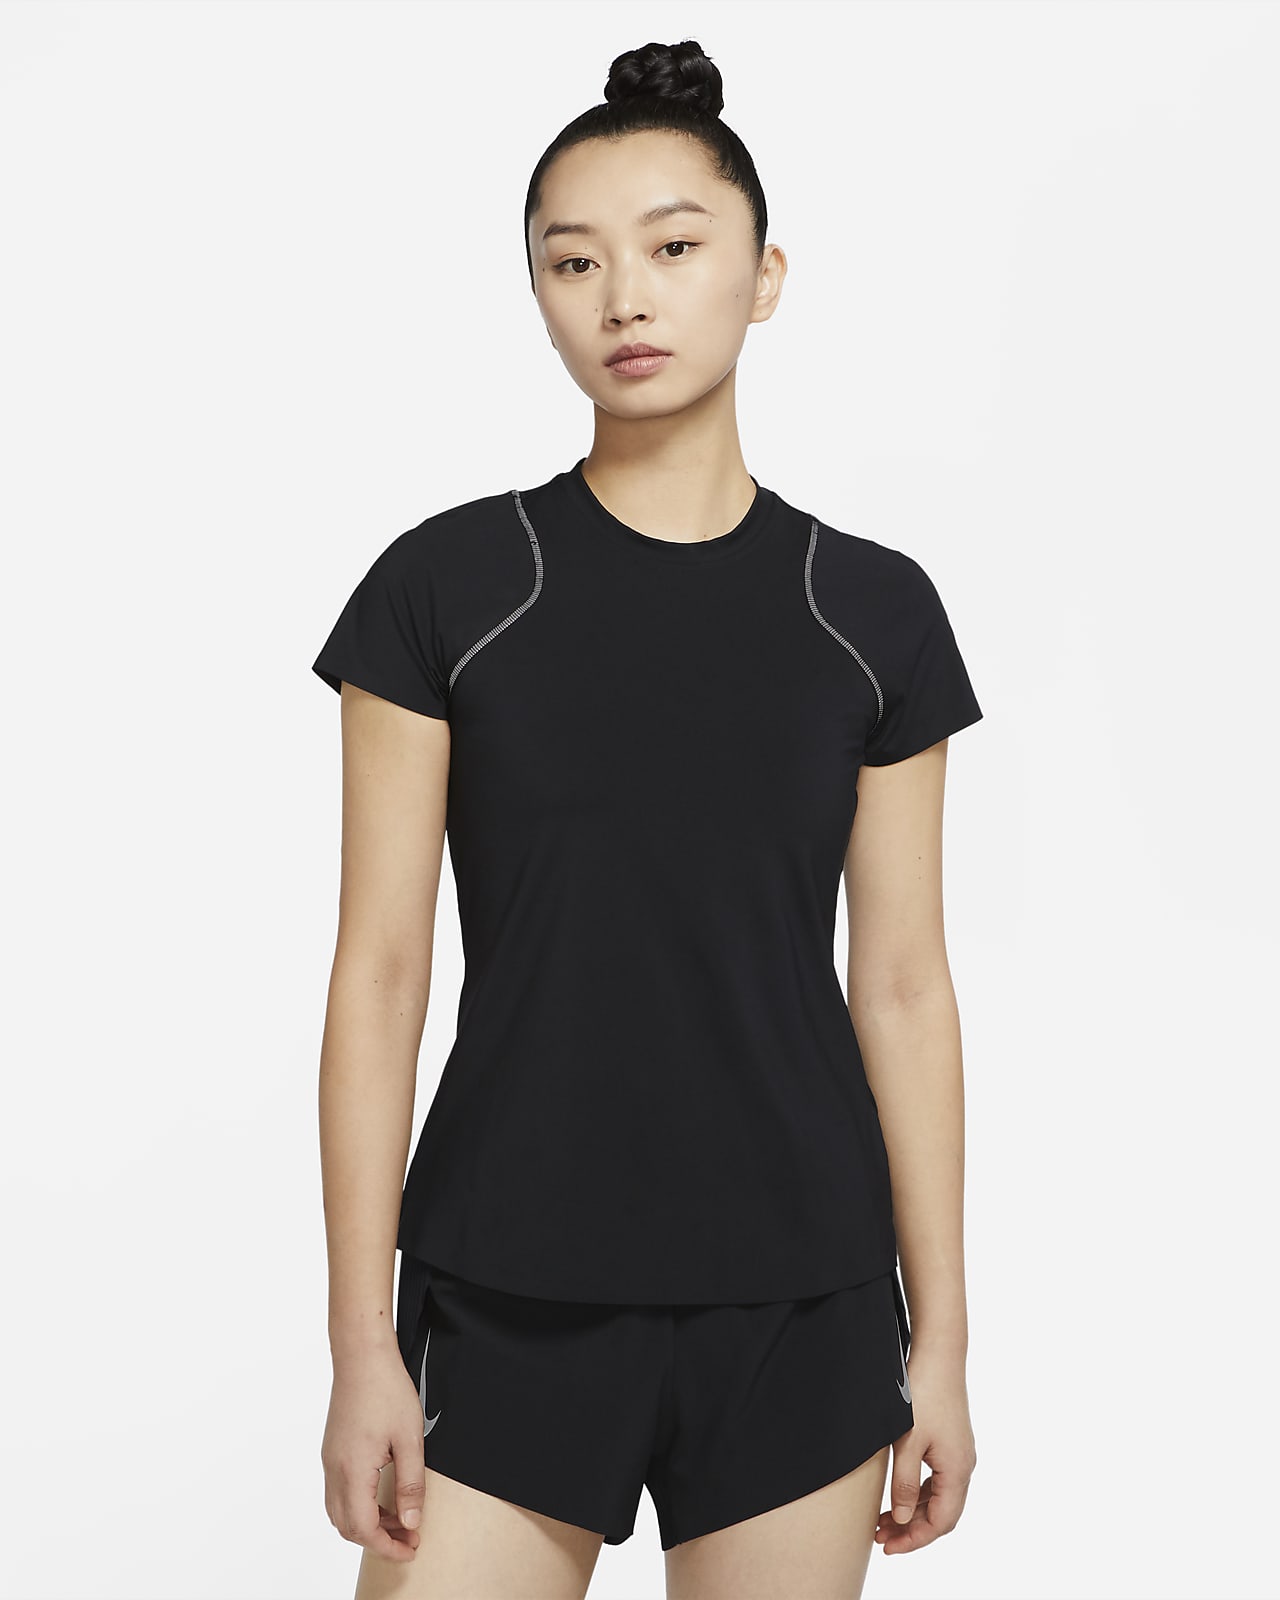 Nike Dri-FIT Run Division Women's Short-Sleeve Top